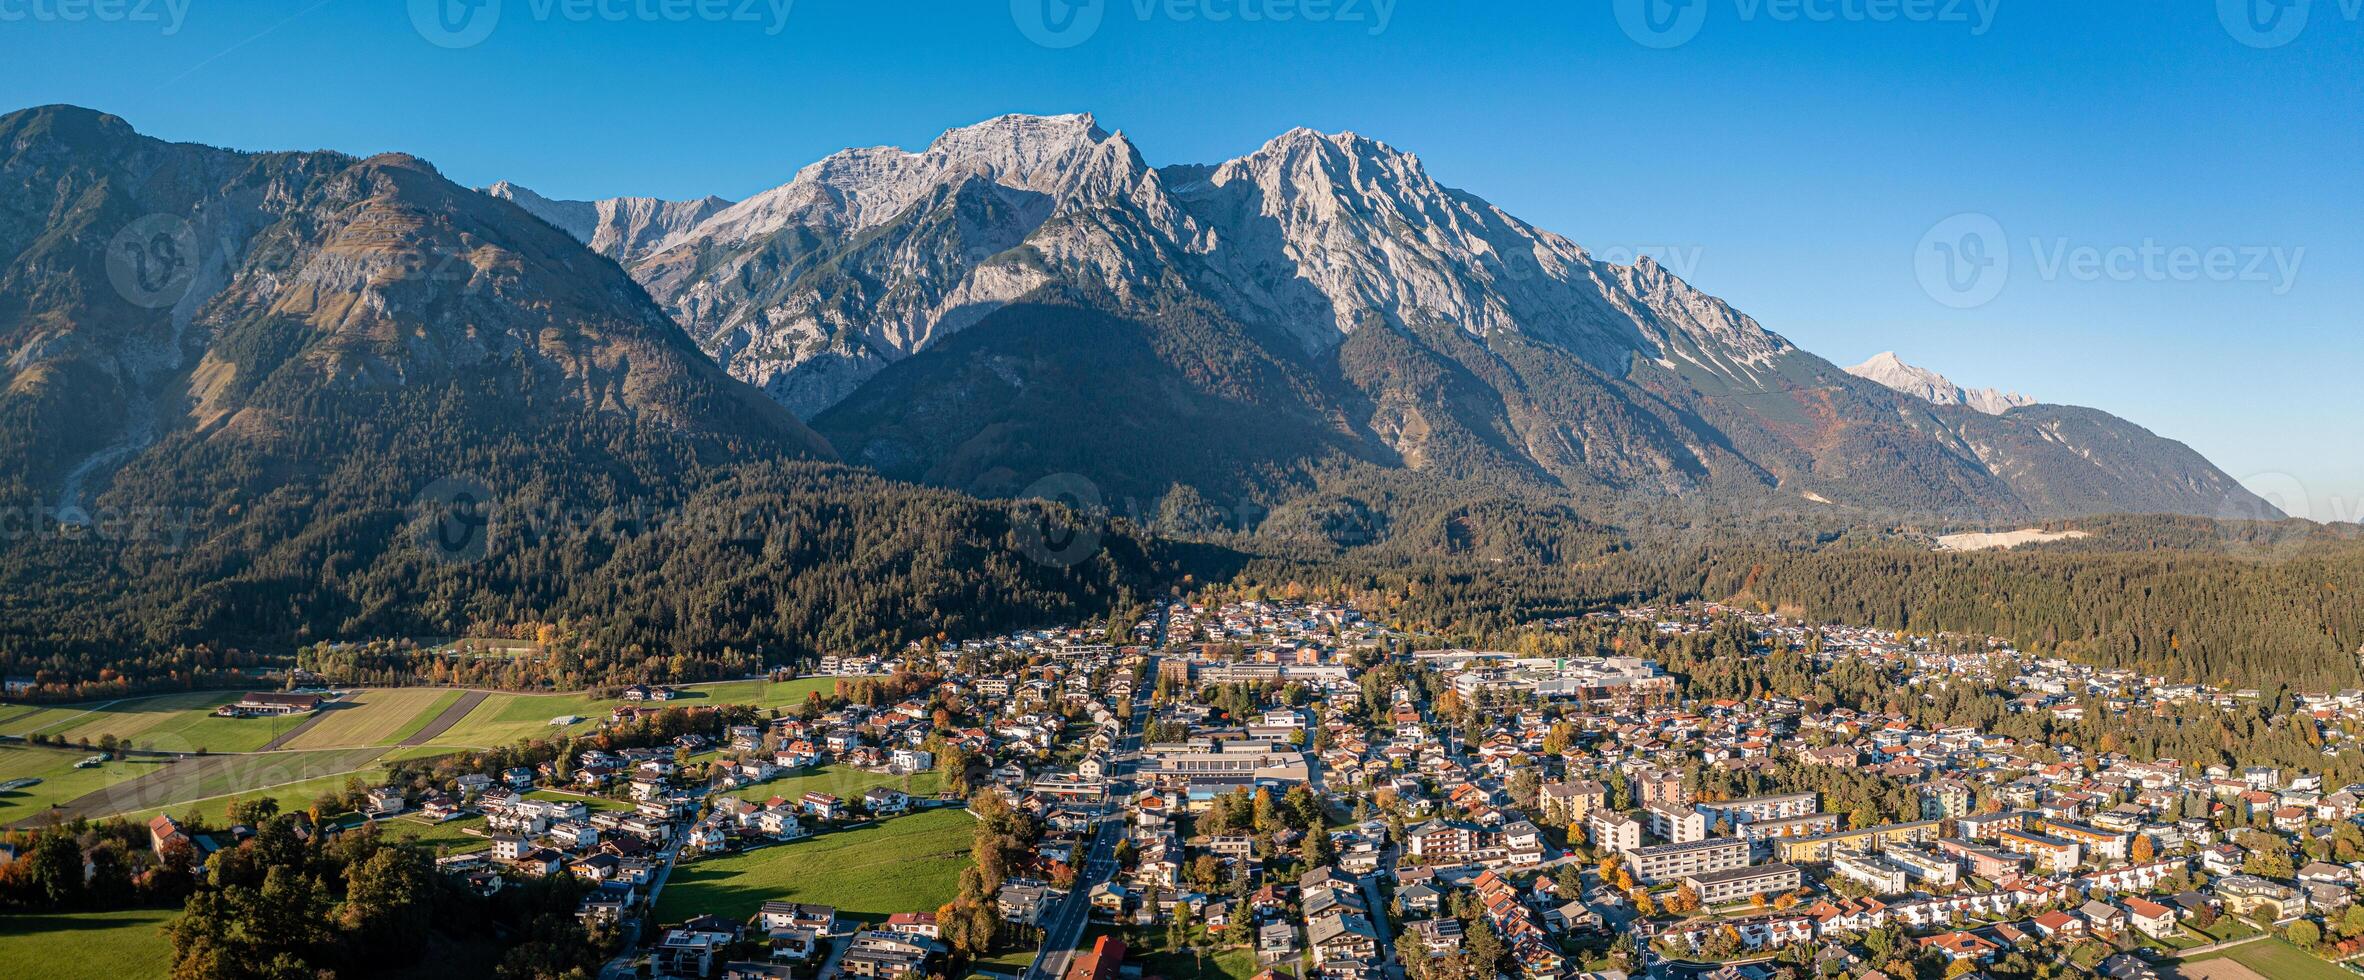 salle Innsbruck auberge vallée. Karwendel montagnes Alpes. aérien panorama photo